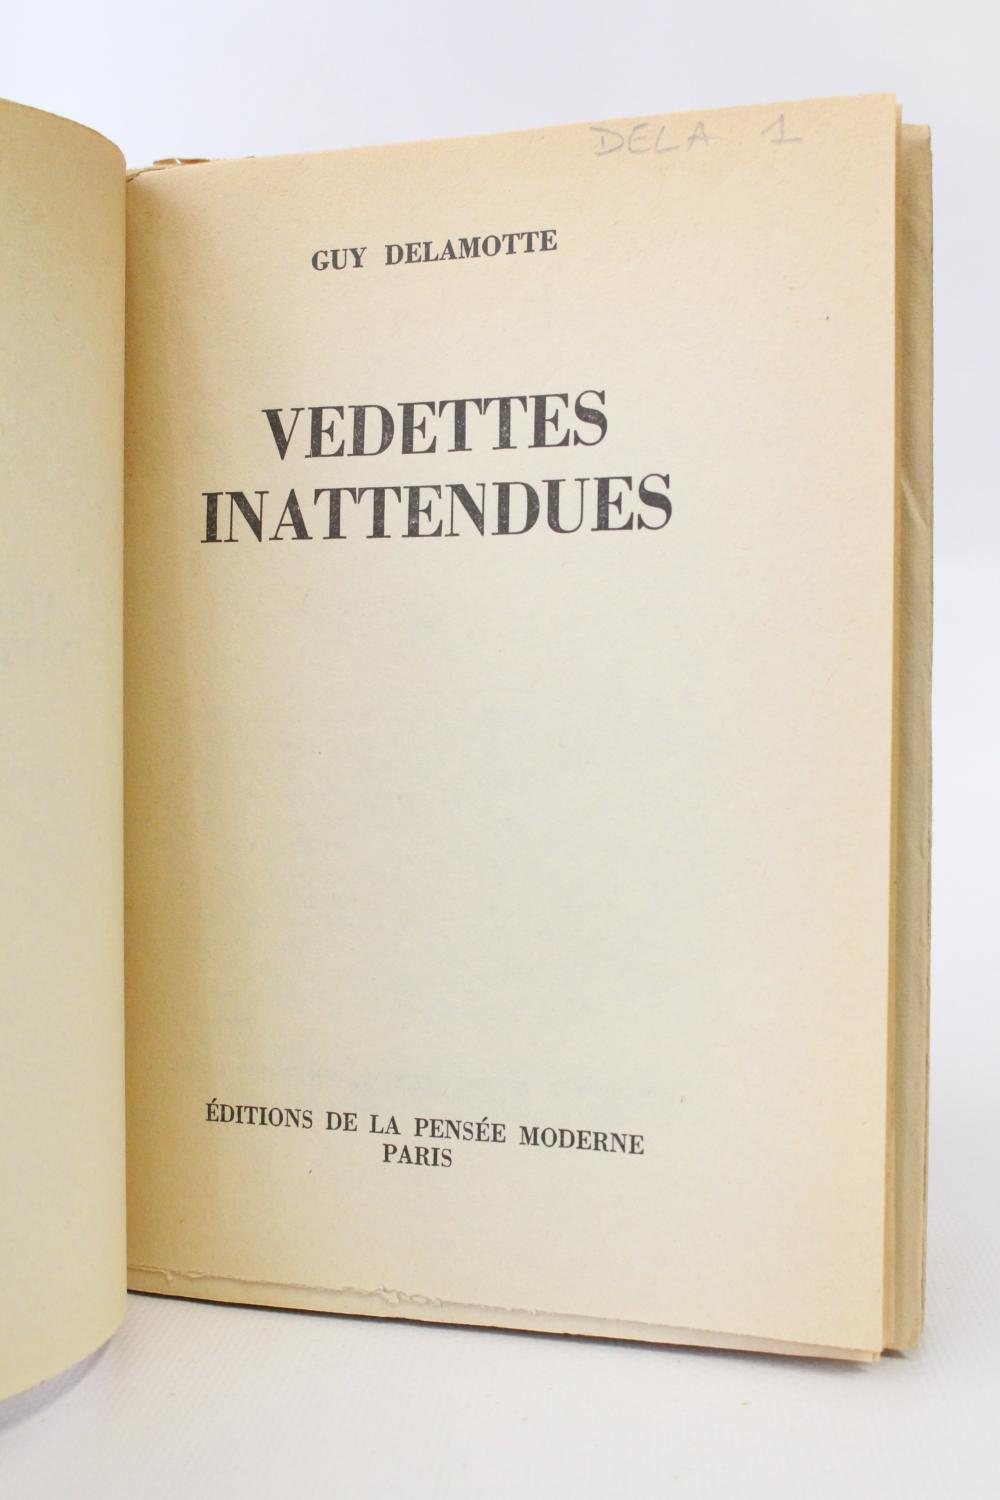 Vedettes inattendues by DELAMOTTE Guy: couverture souple (1957) Signed ...